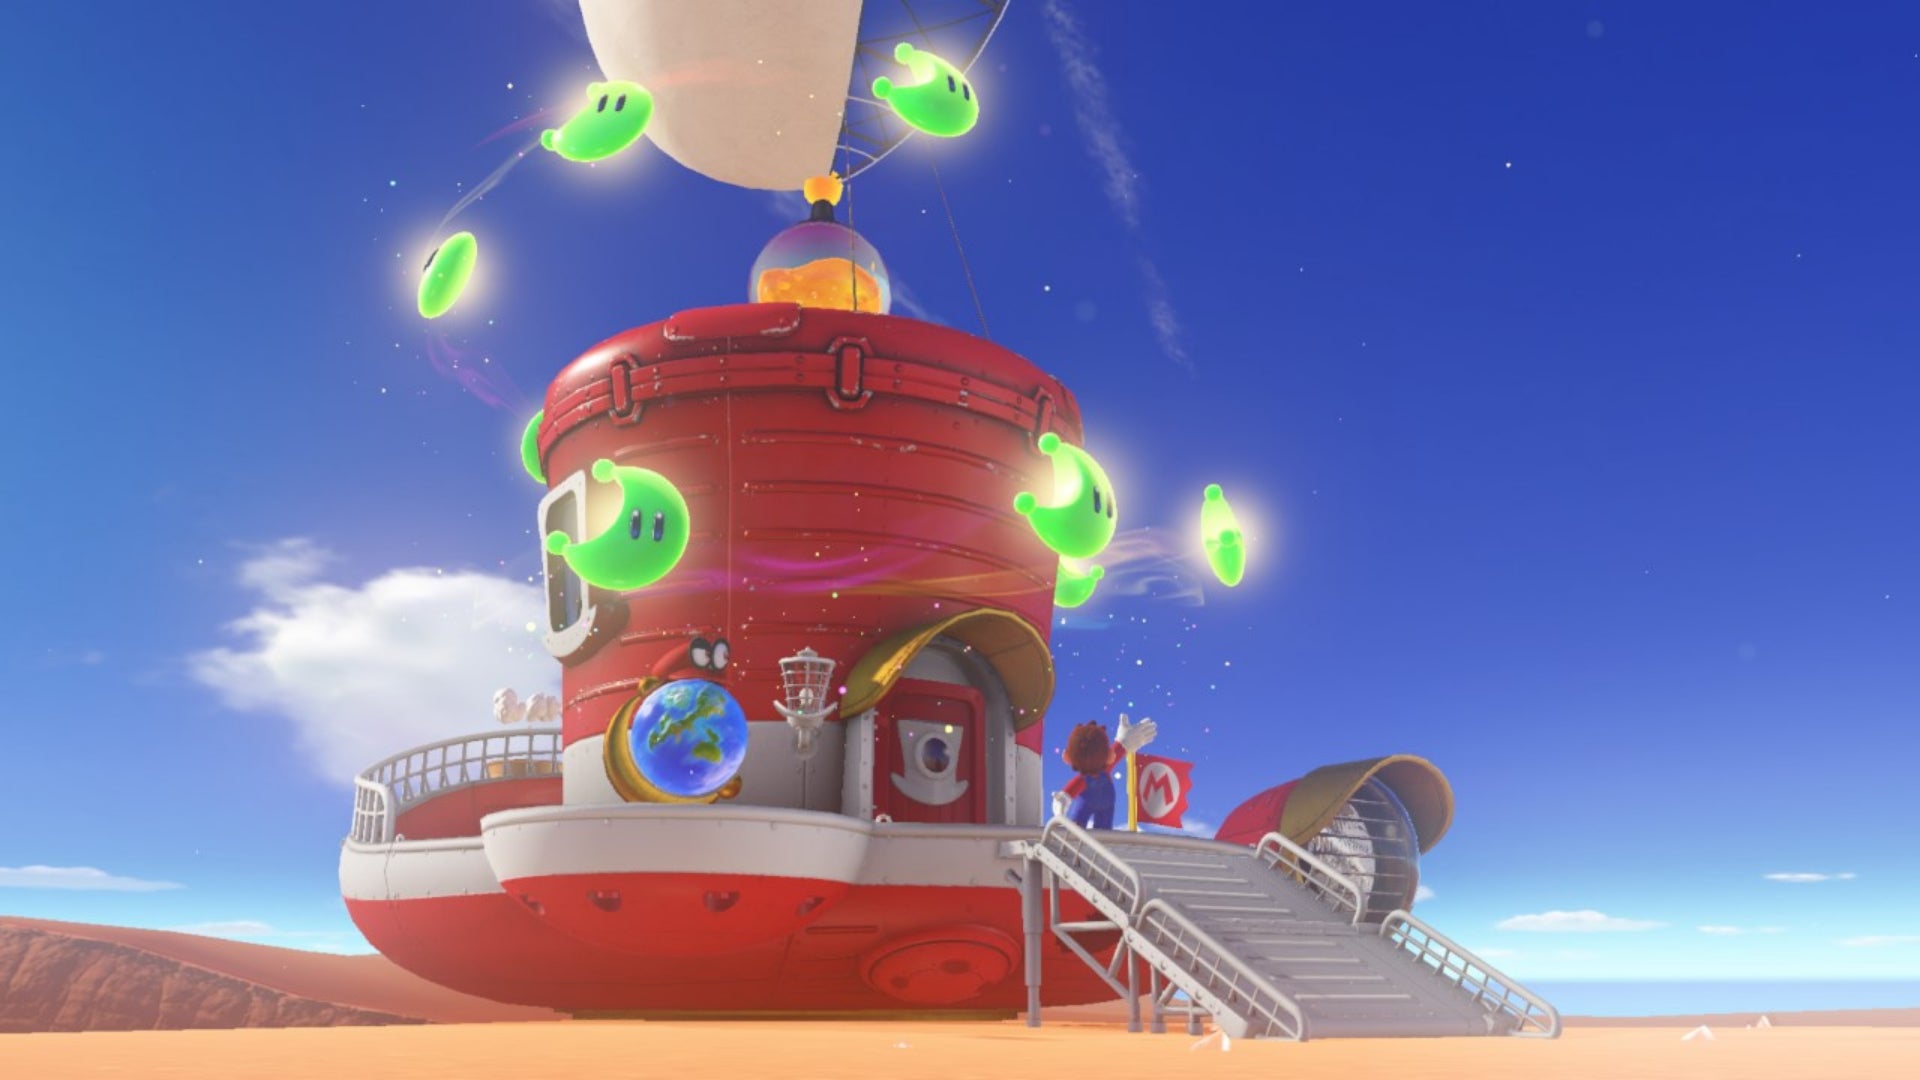 Imaginative artist Mario Odyssey using VG247